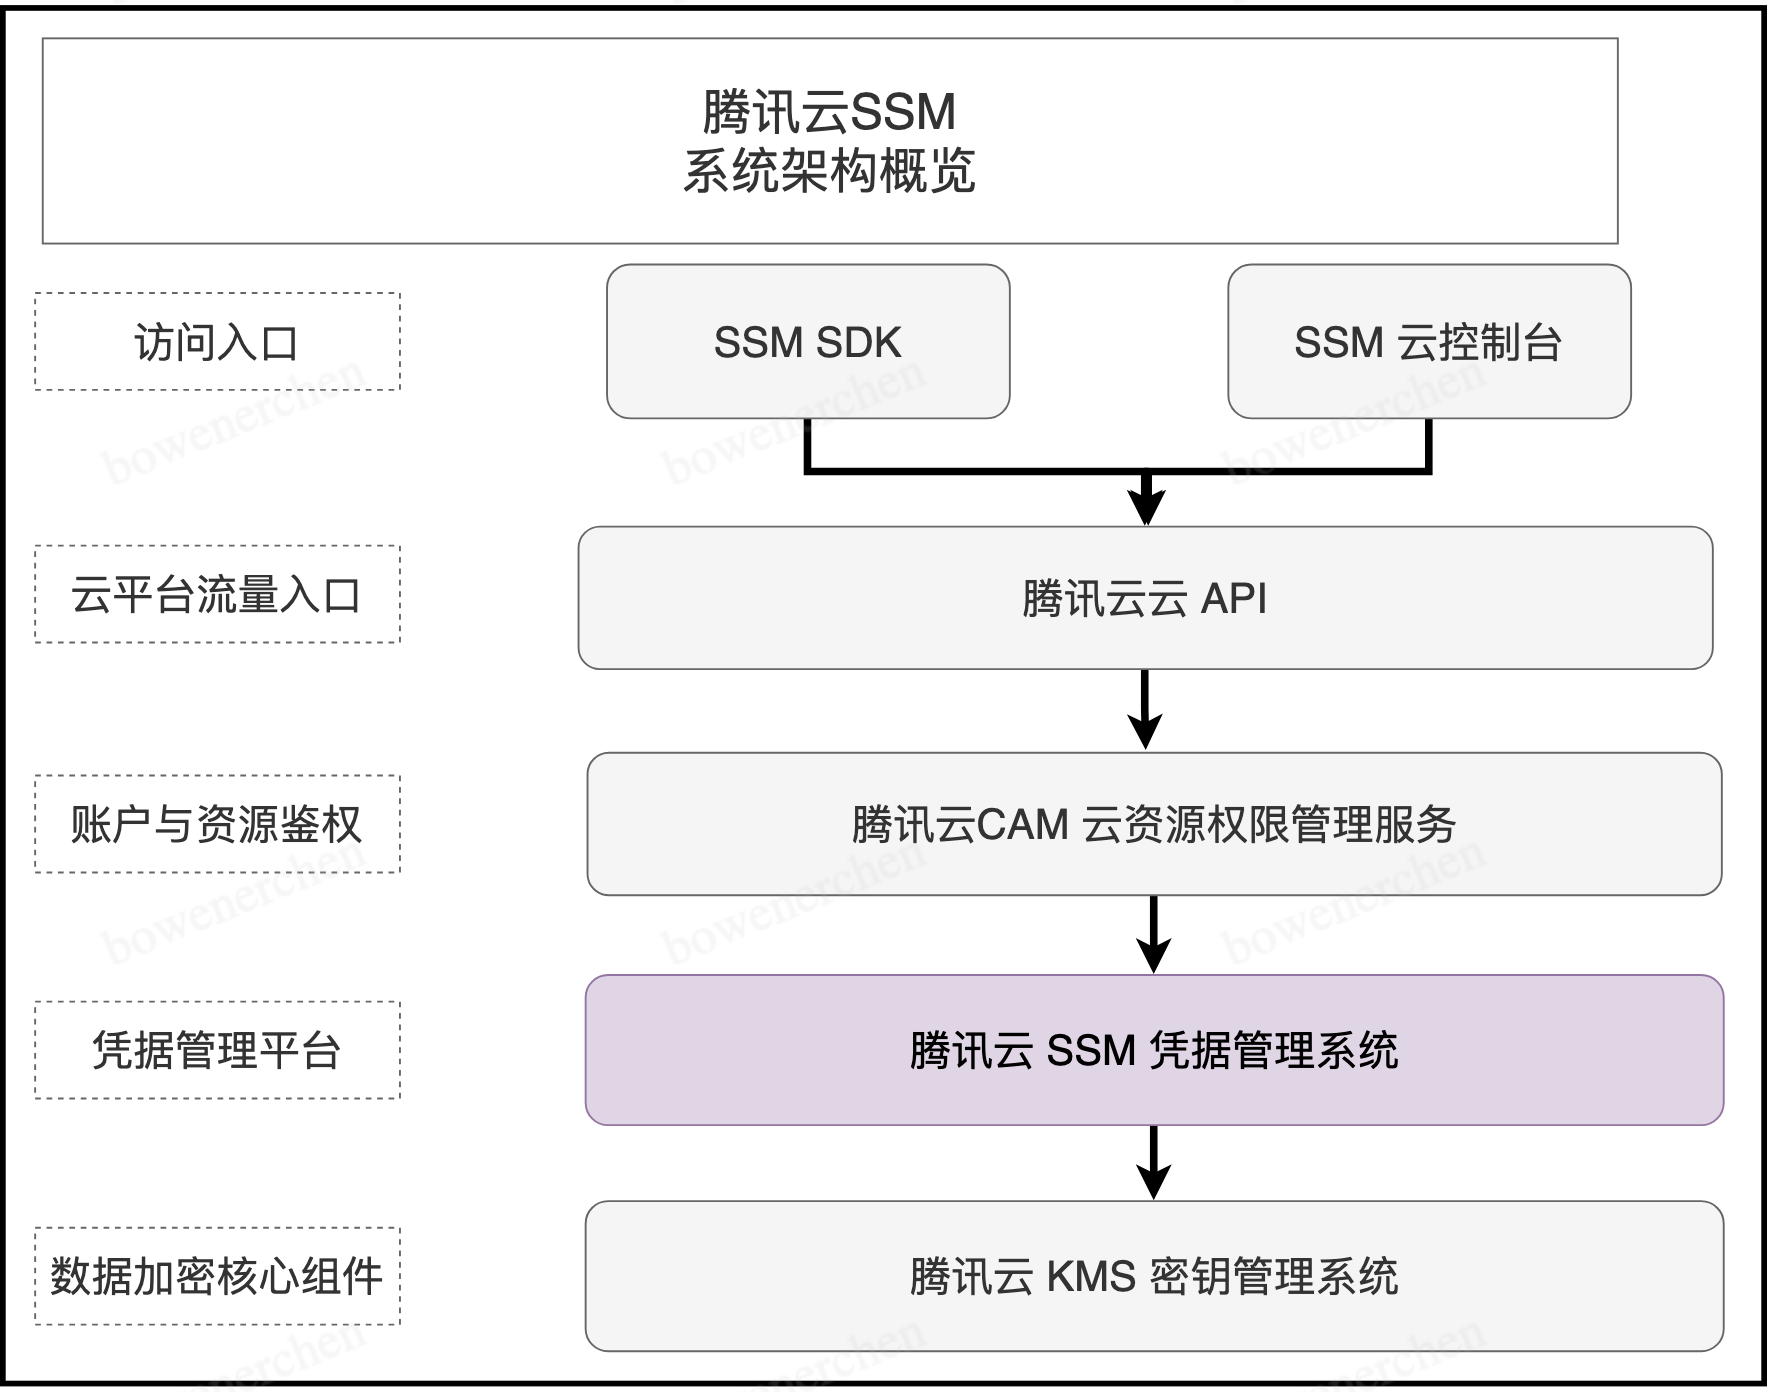 SSM 系统架构概览